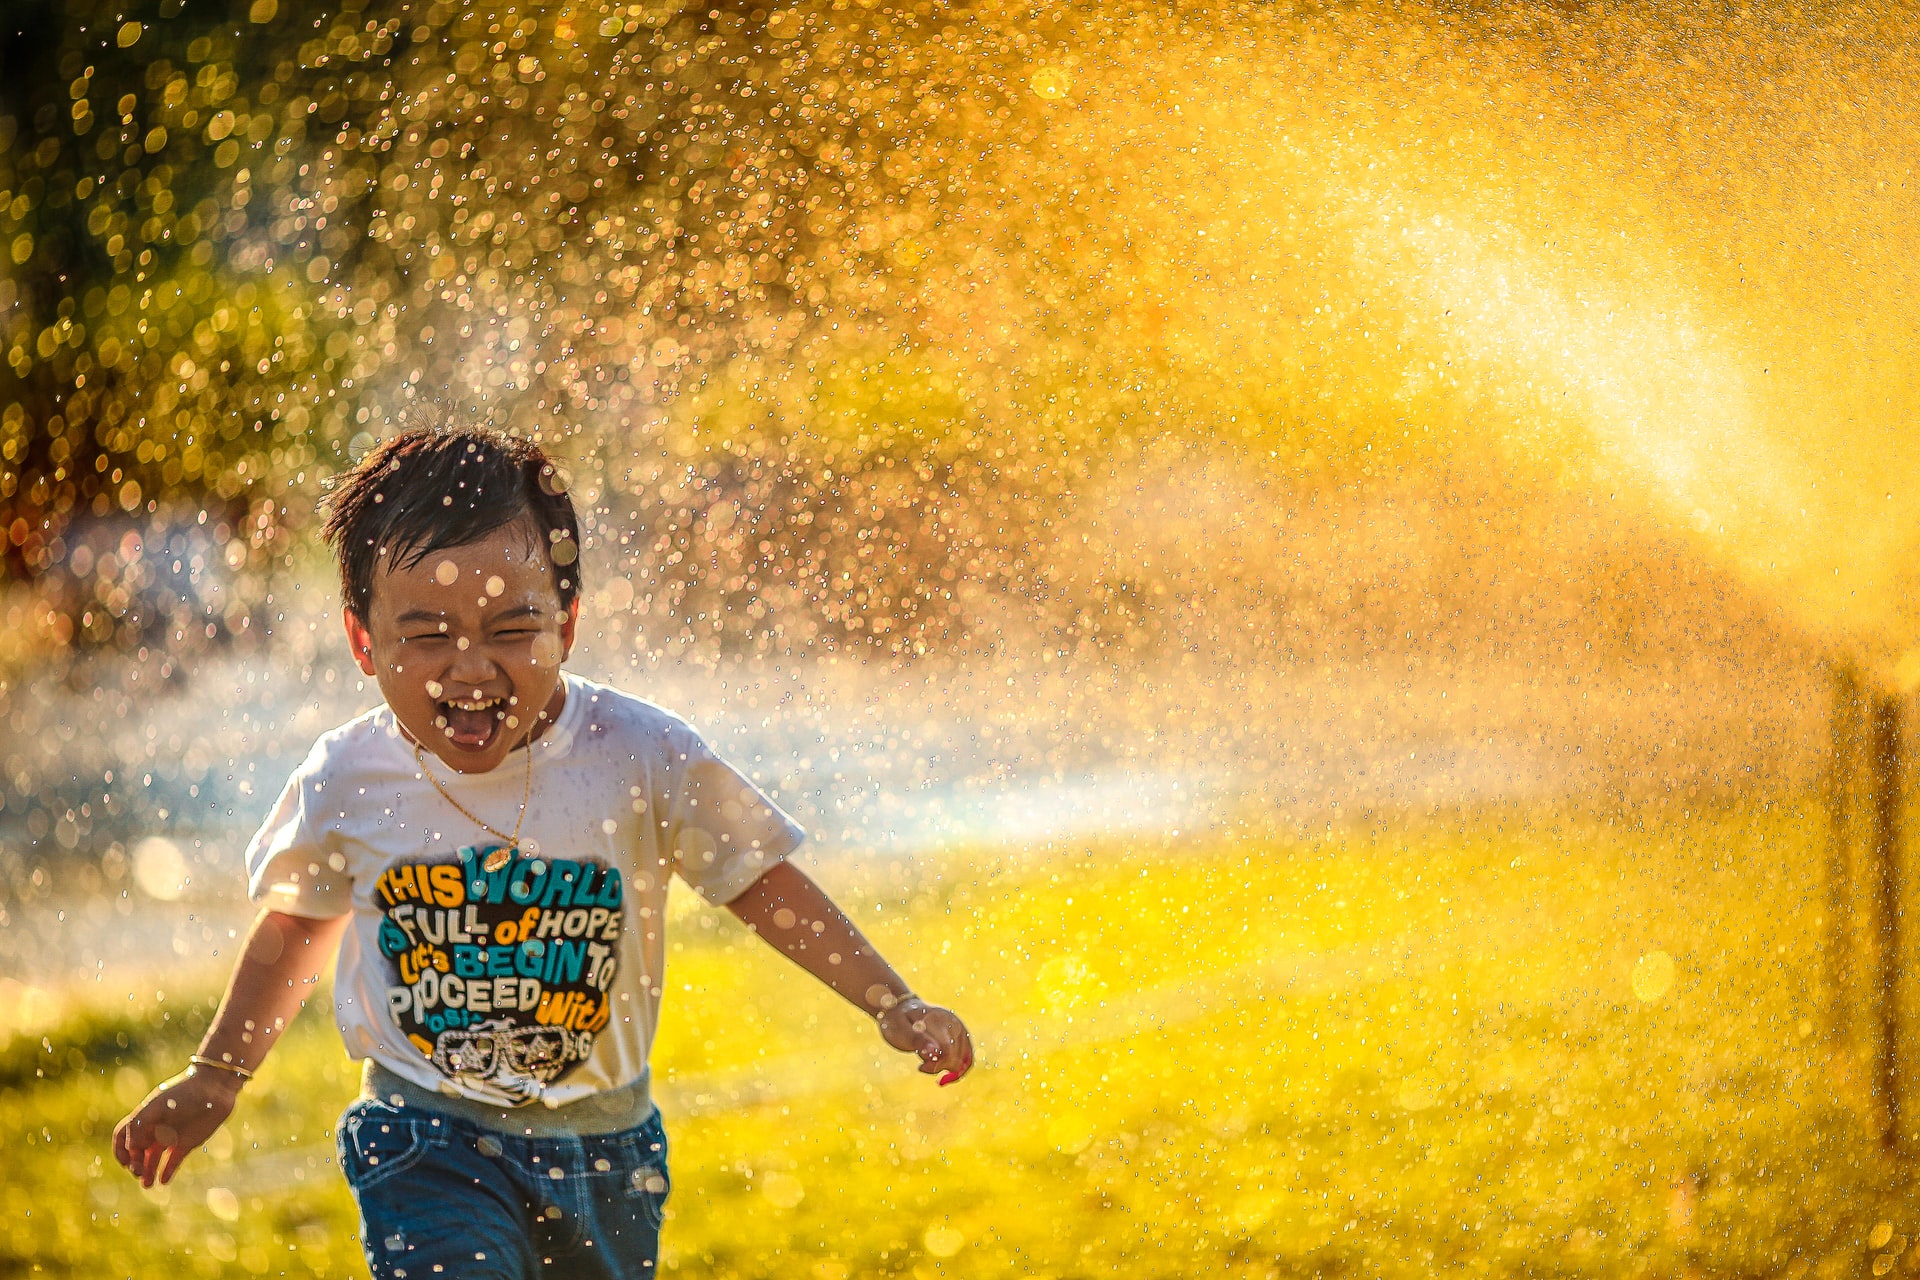 Child wearing tee shirt and jeans running through sprinkler.